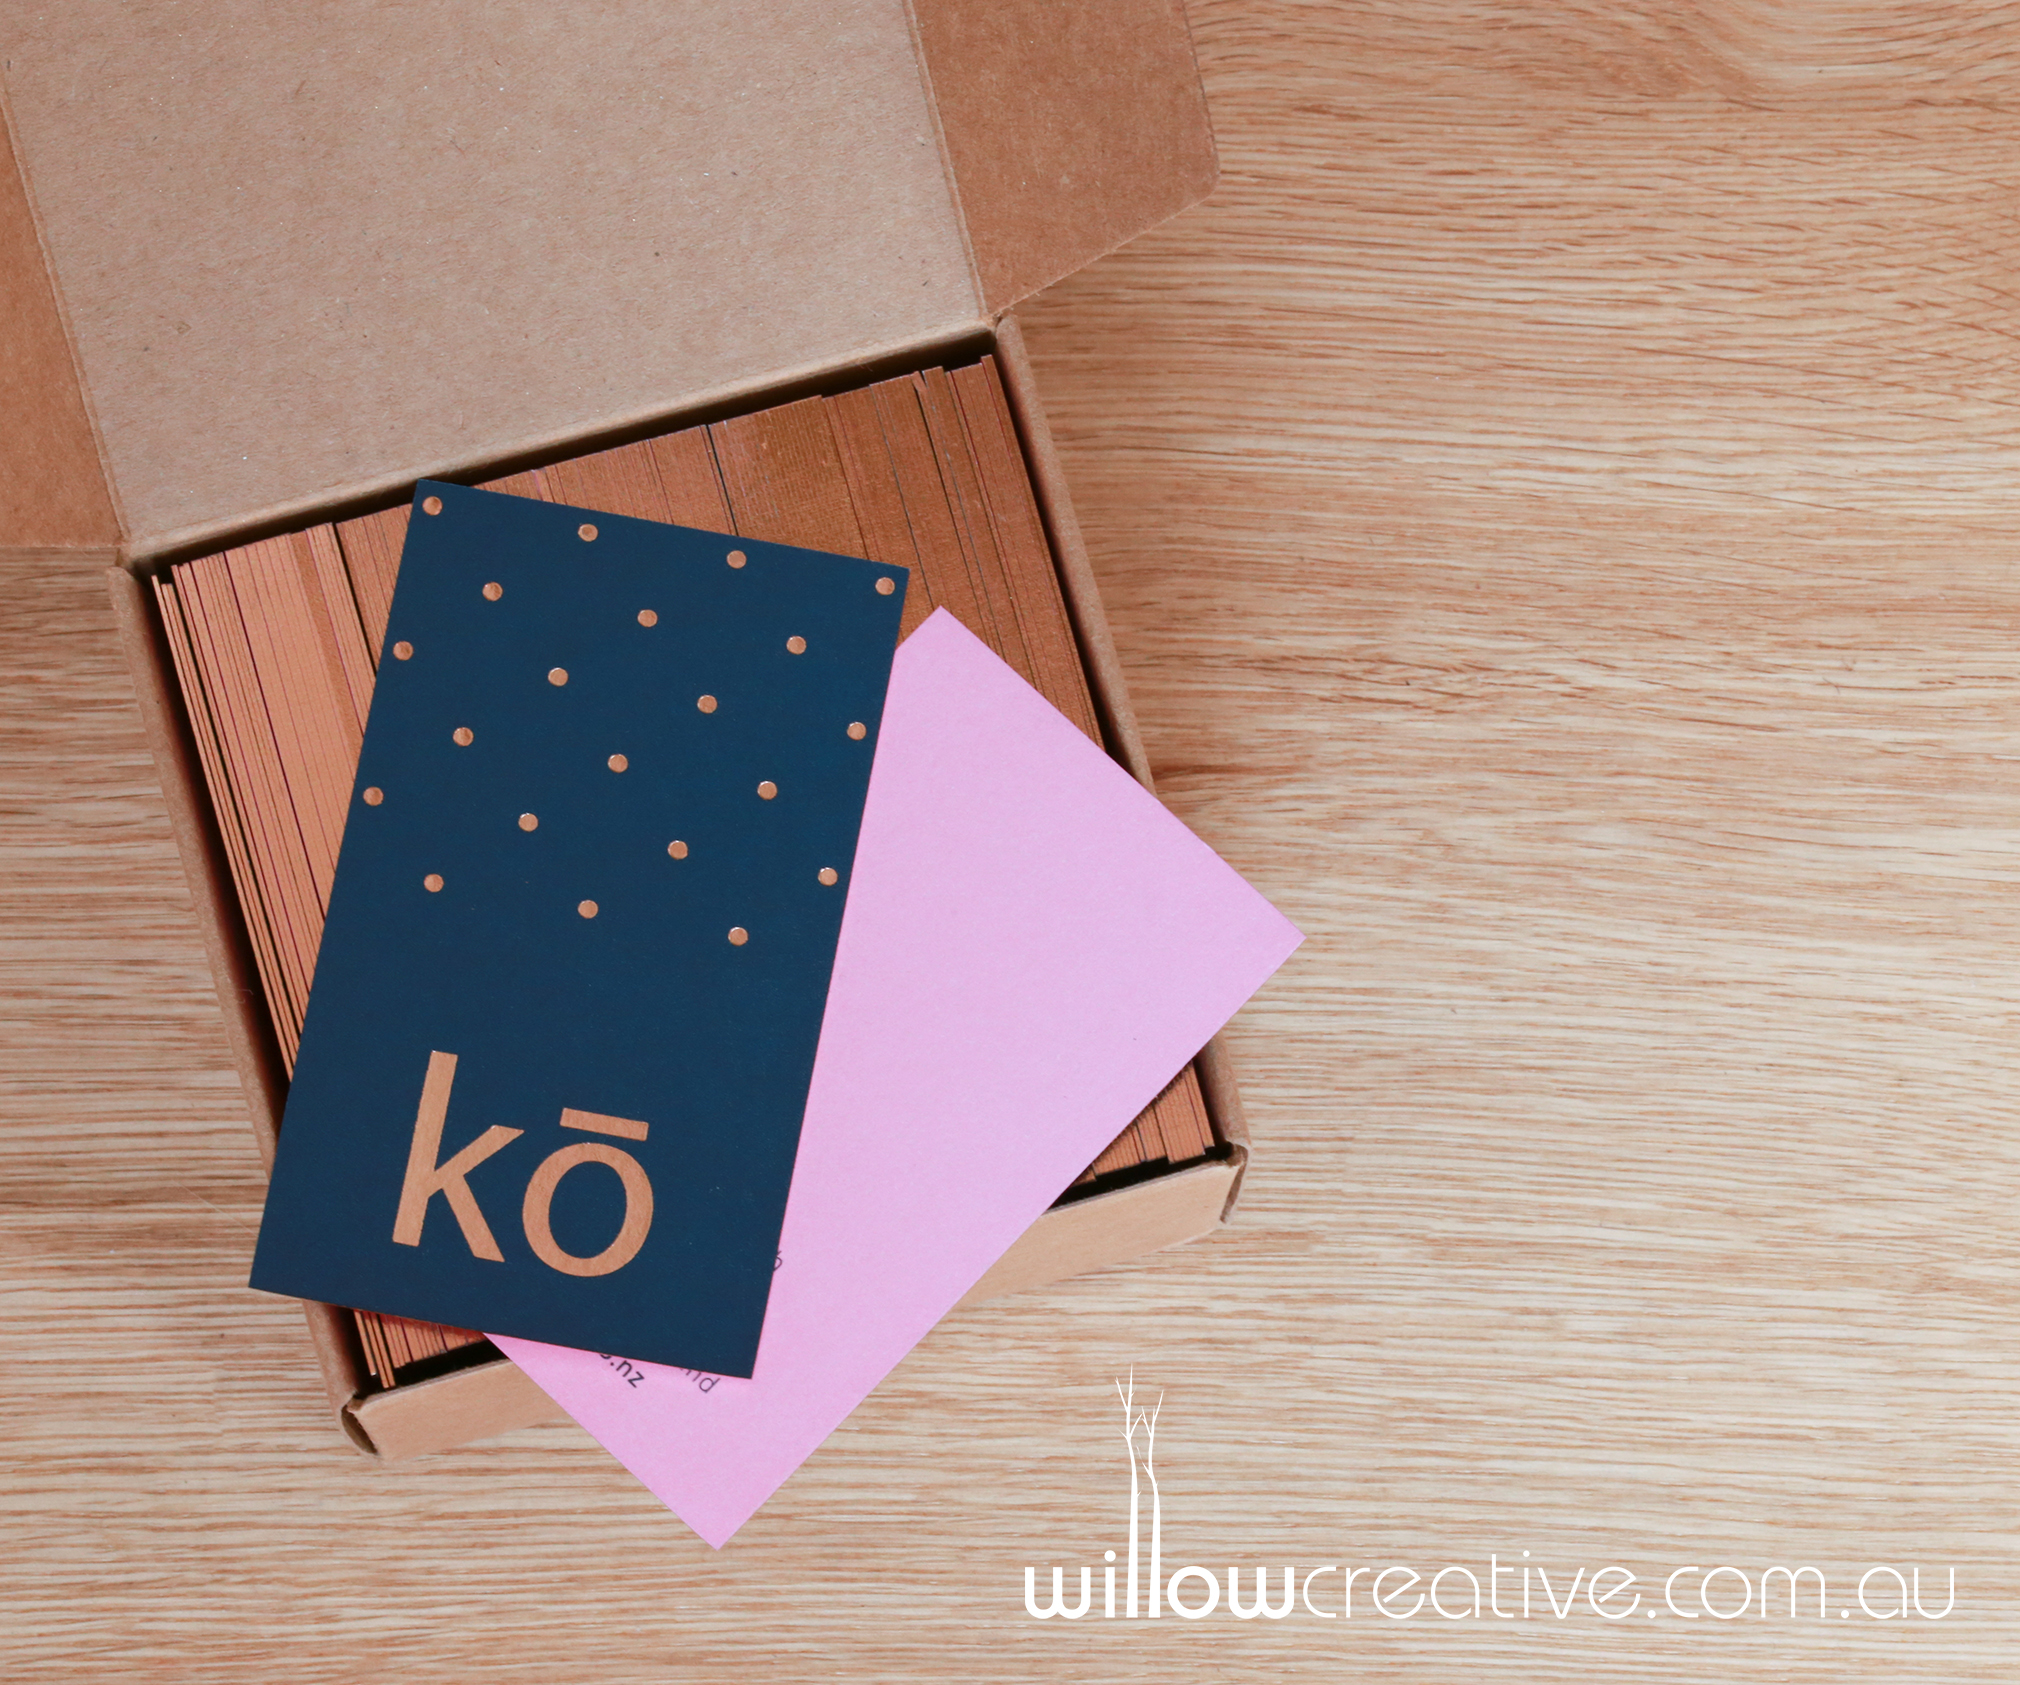 ko cards-1 copy small.jpg